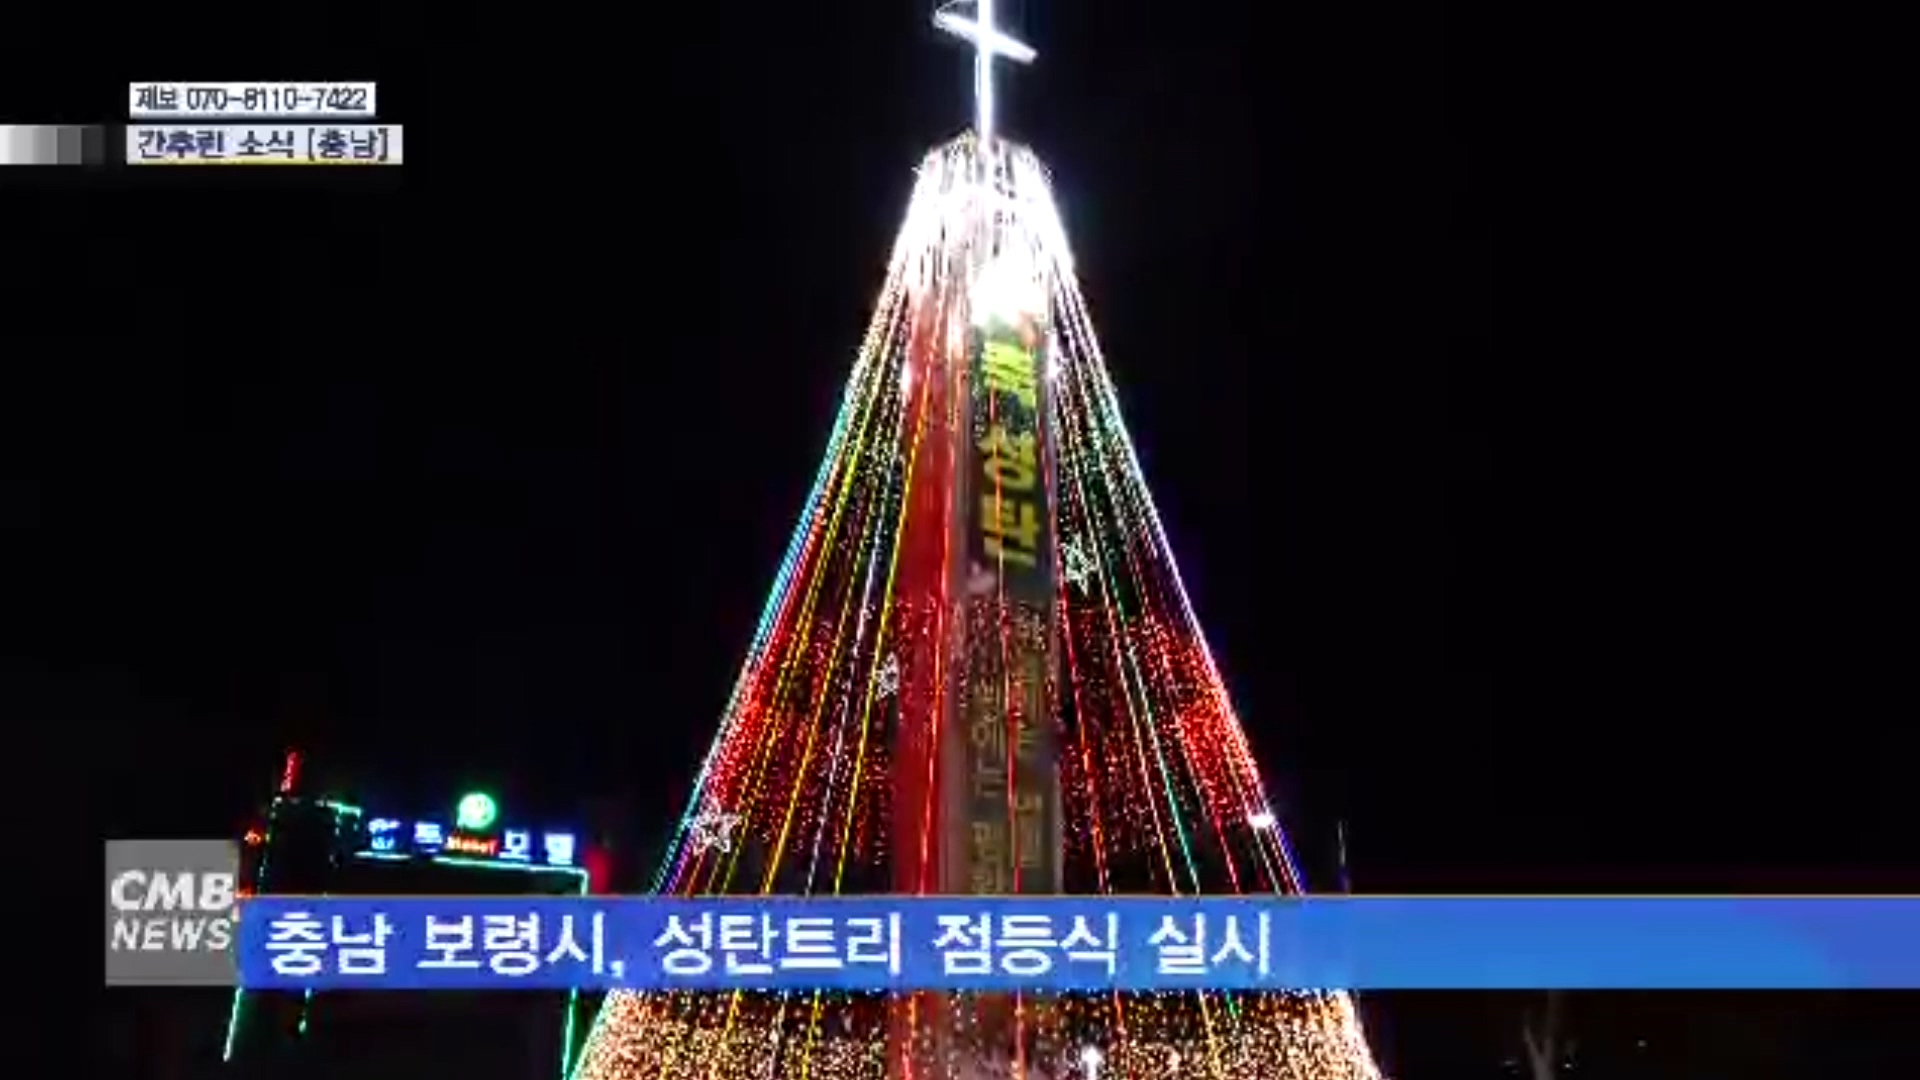 1204 CMB 2017 성탄트리 점등식 개최